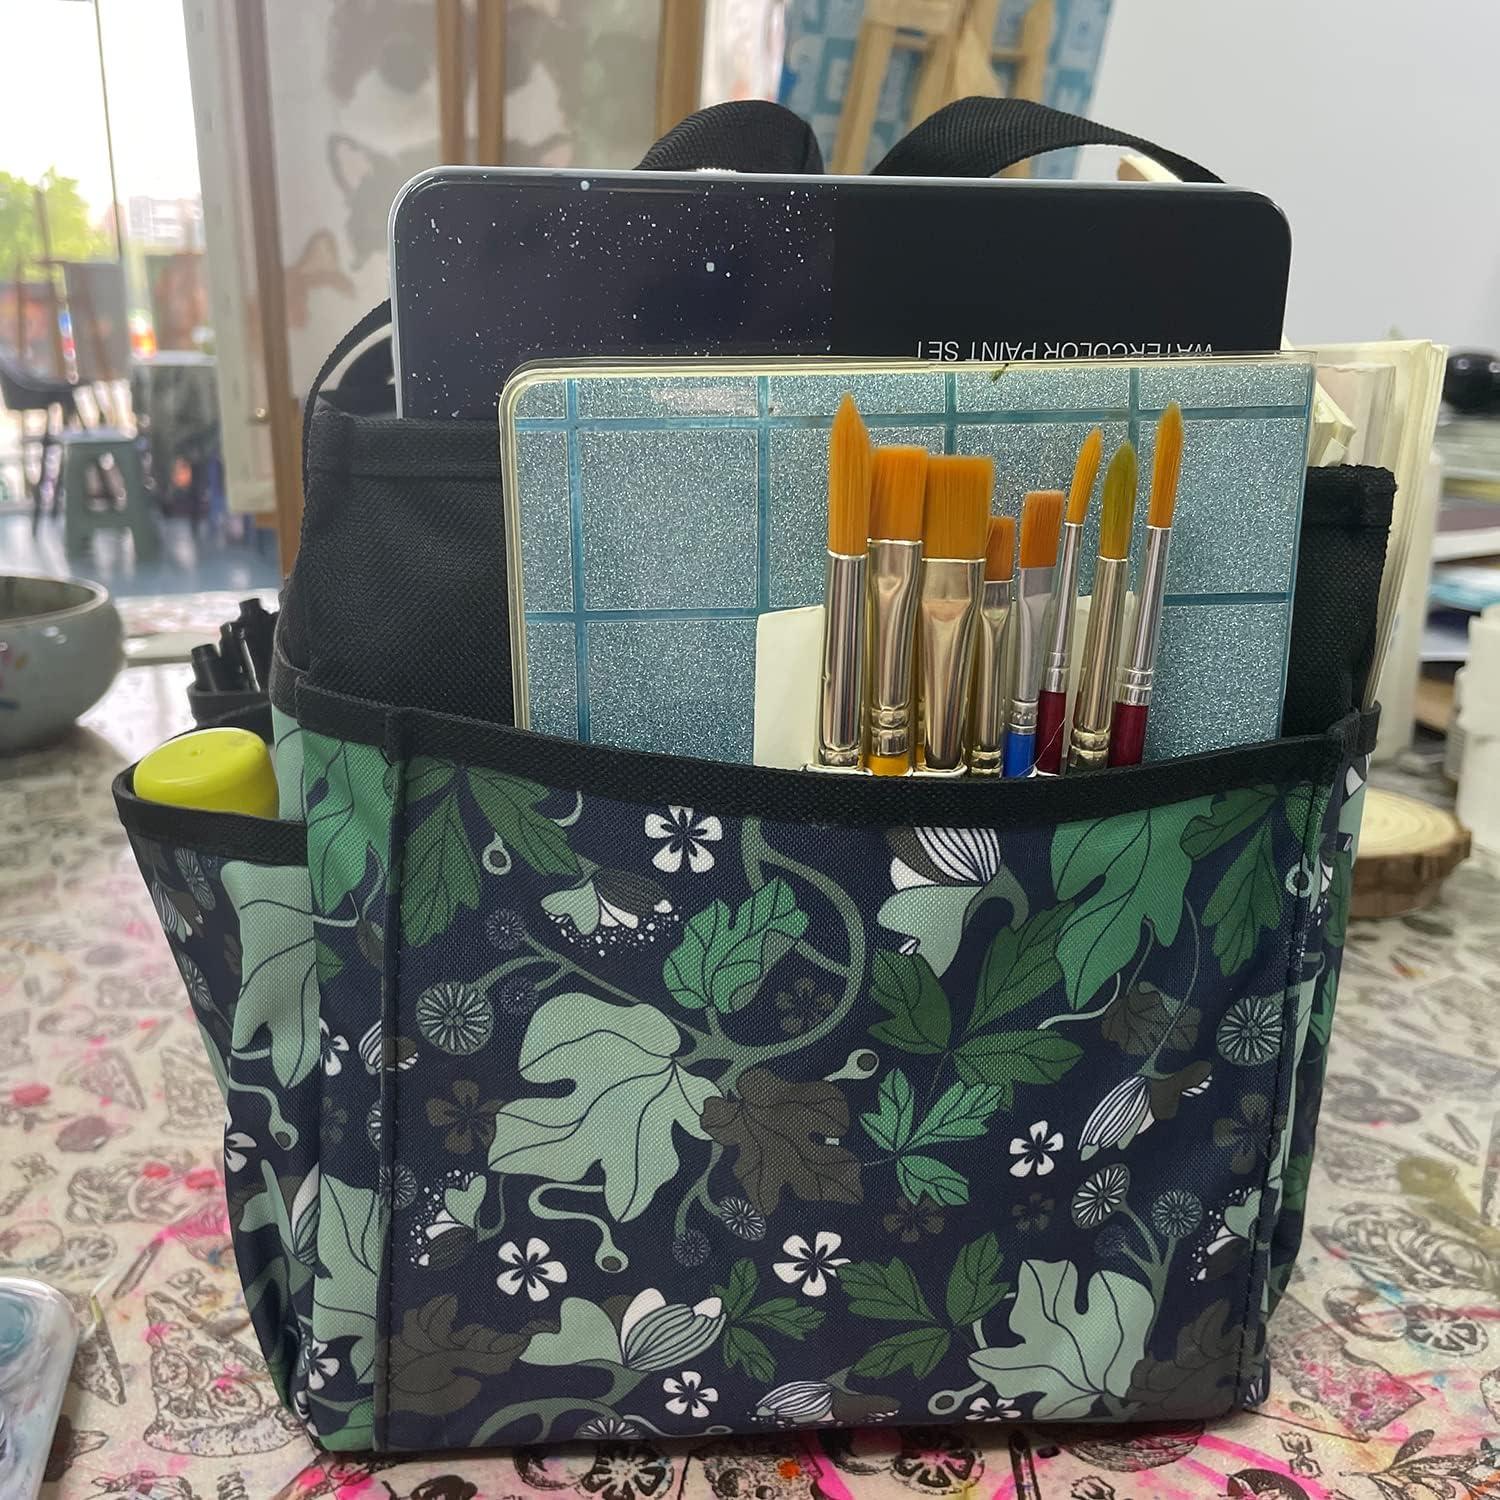 JOSIVIKY Craft Art Organizer Tote Bag, Cleaning Supply Caddy, Car Blue  Floral